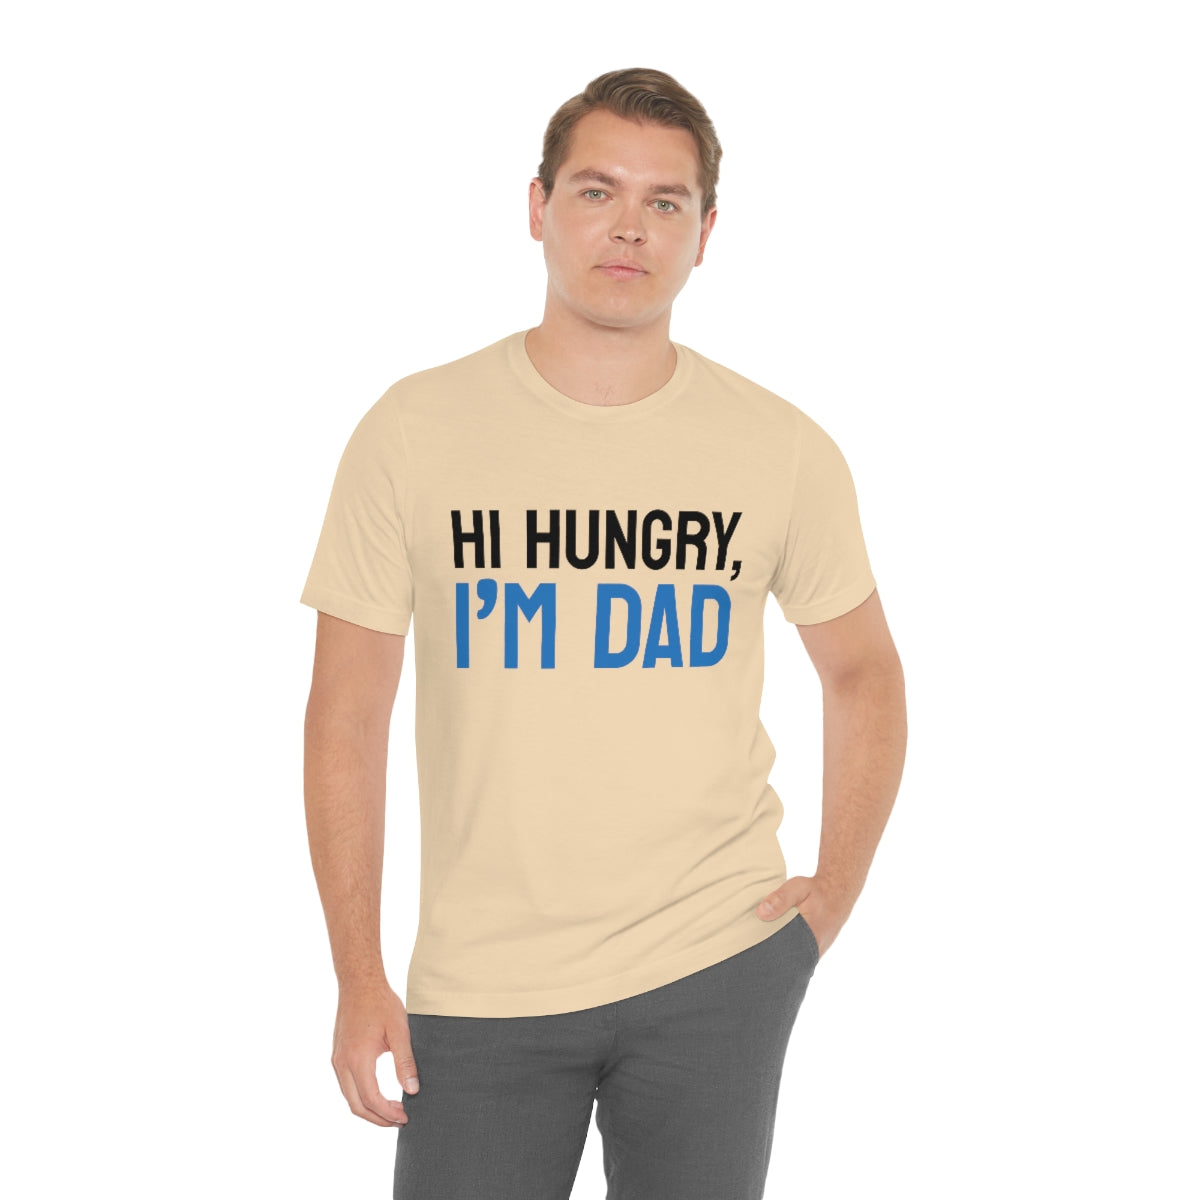 Hi hungry, I'm dad - Funny Unisex Short Sleeve Tee - CrazyTomTShirts